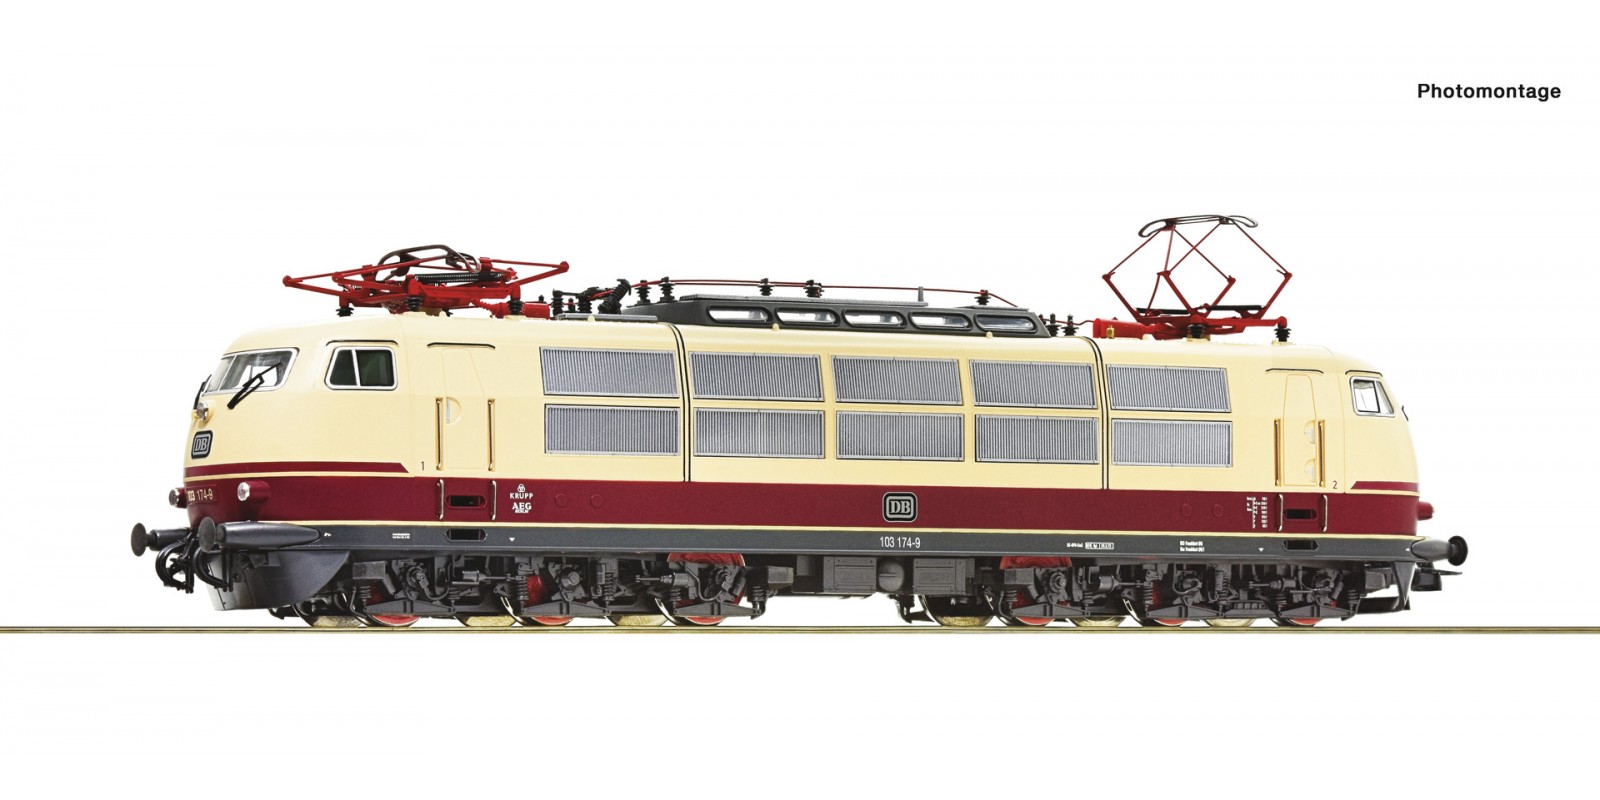 RO7510001 Electric locomotive 103 174-9 DB